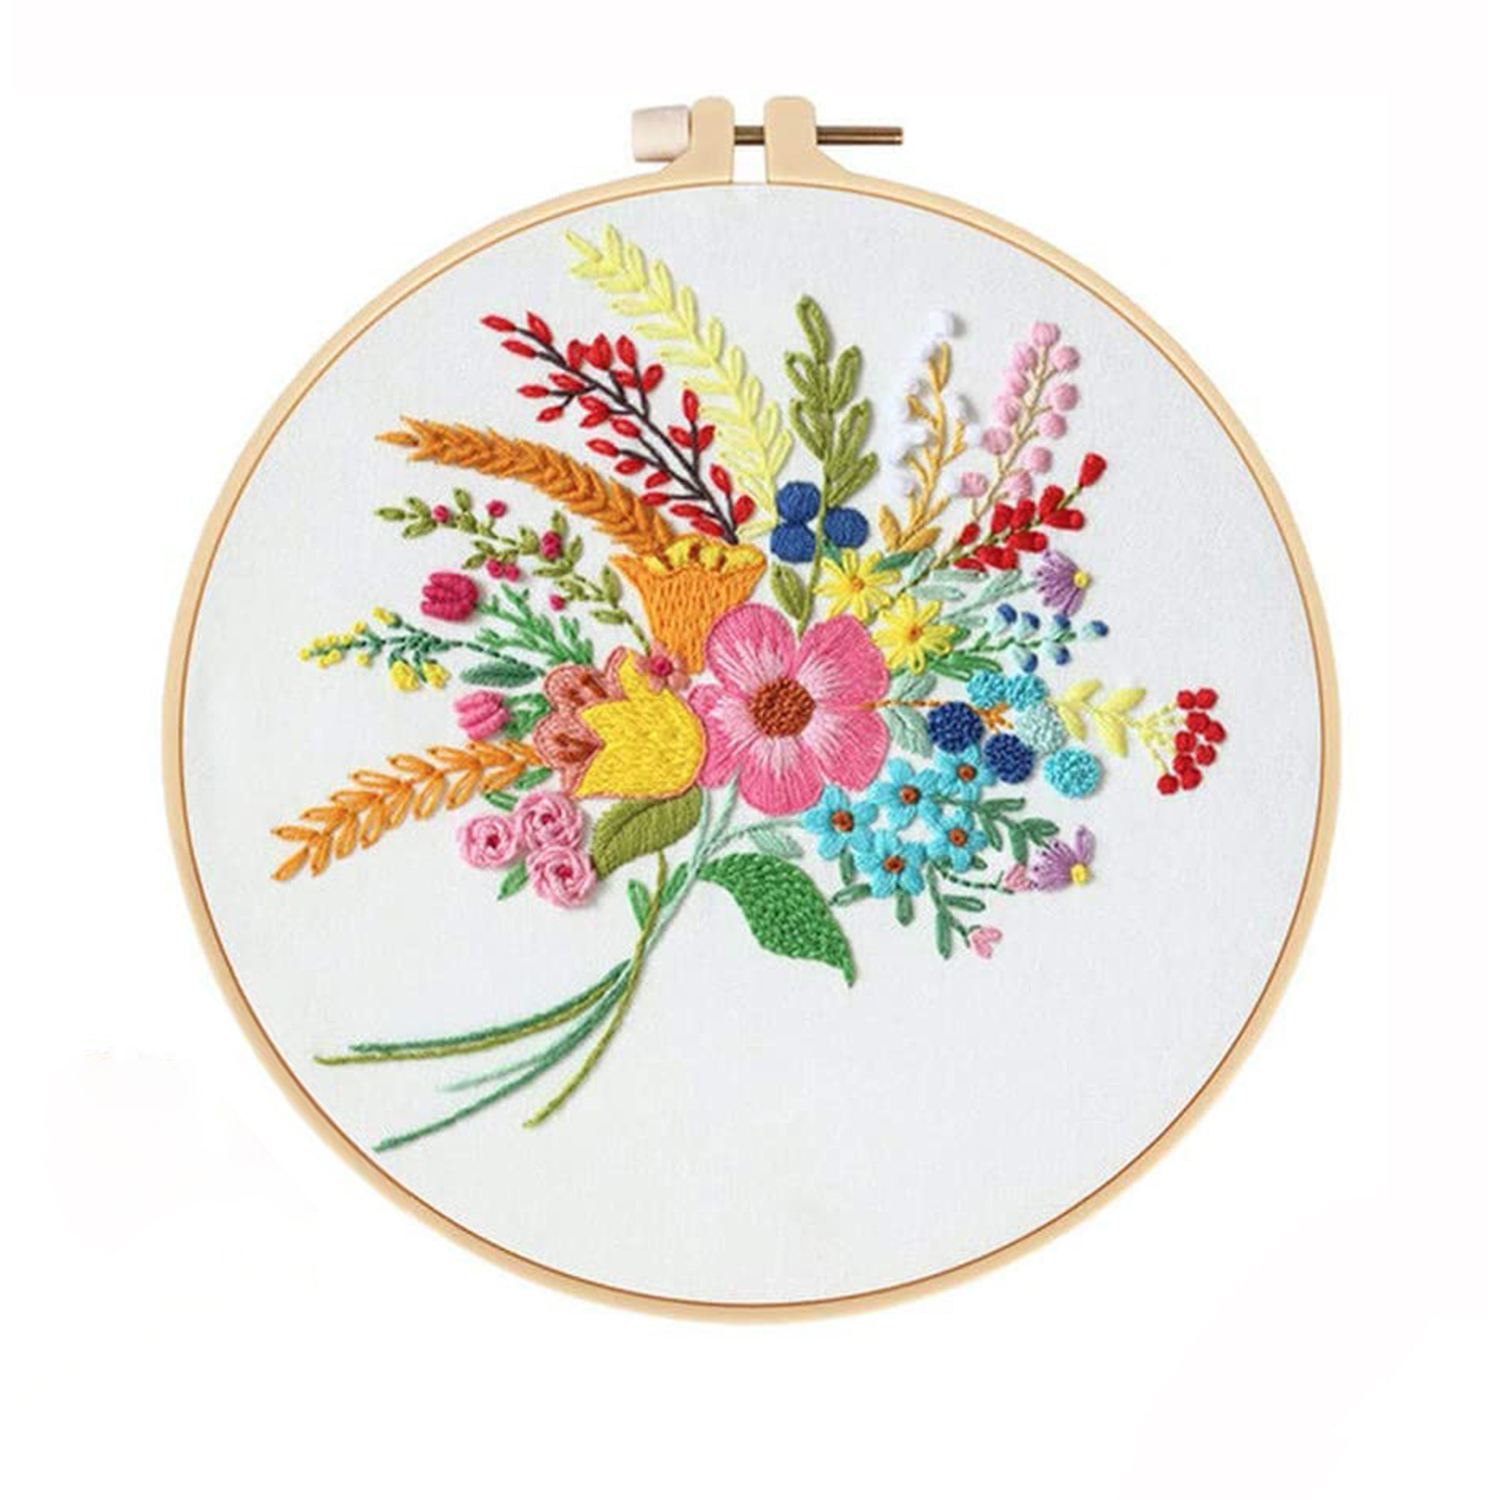 Handmade Embroidery Kit Craft Cross stitch kits beginner - Bouquet Pattern